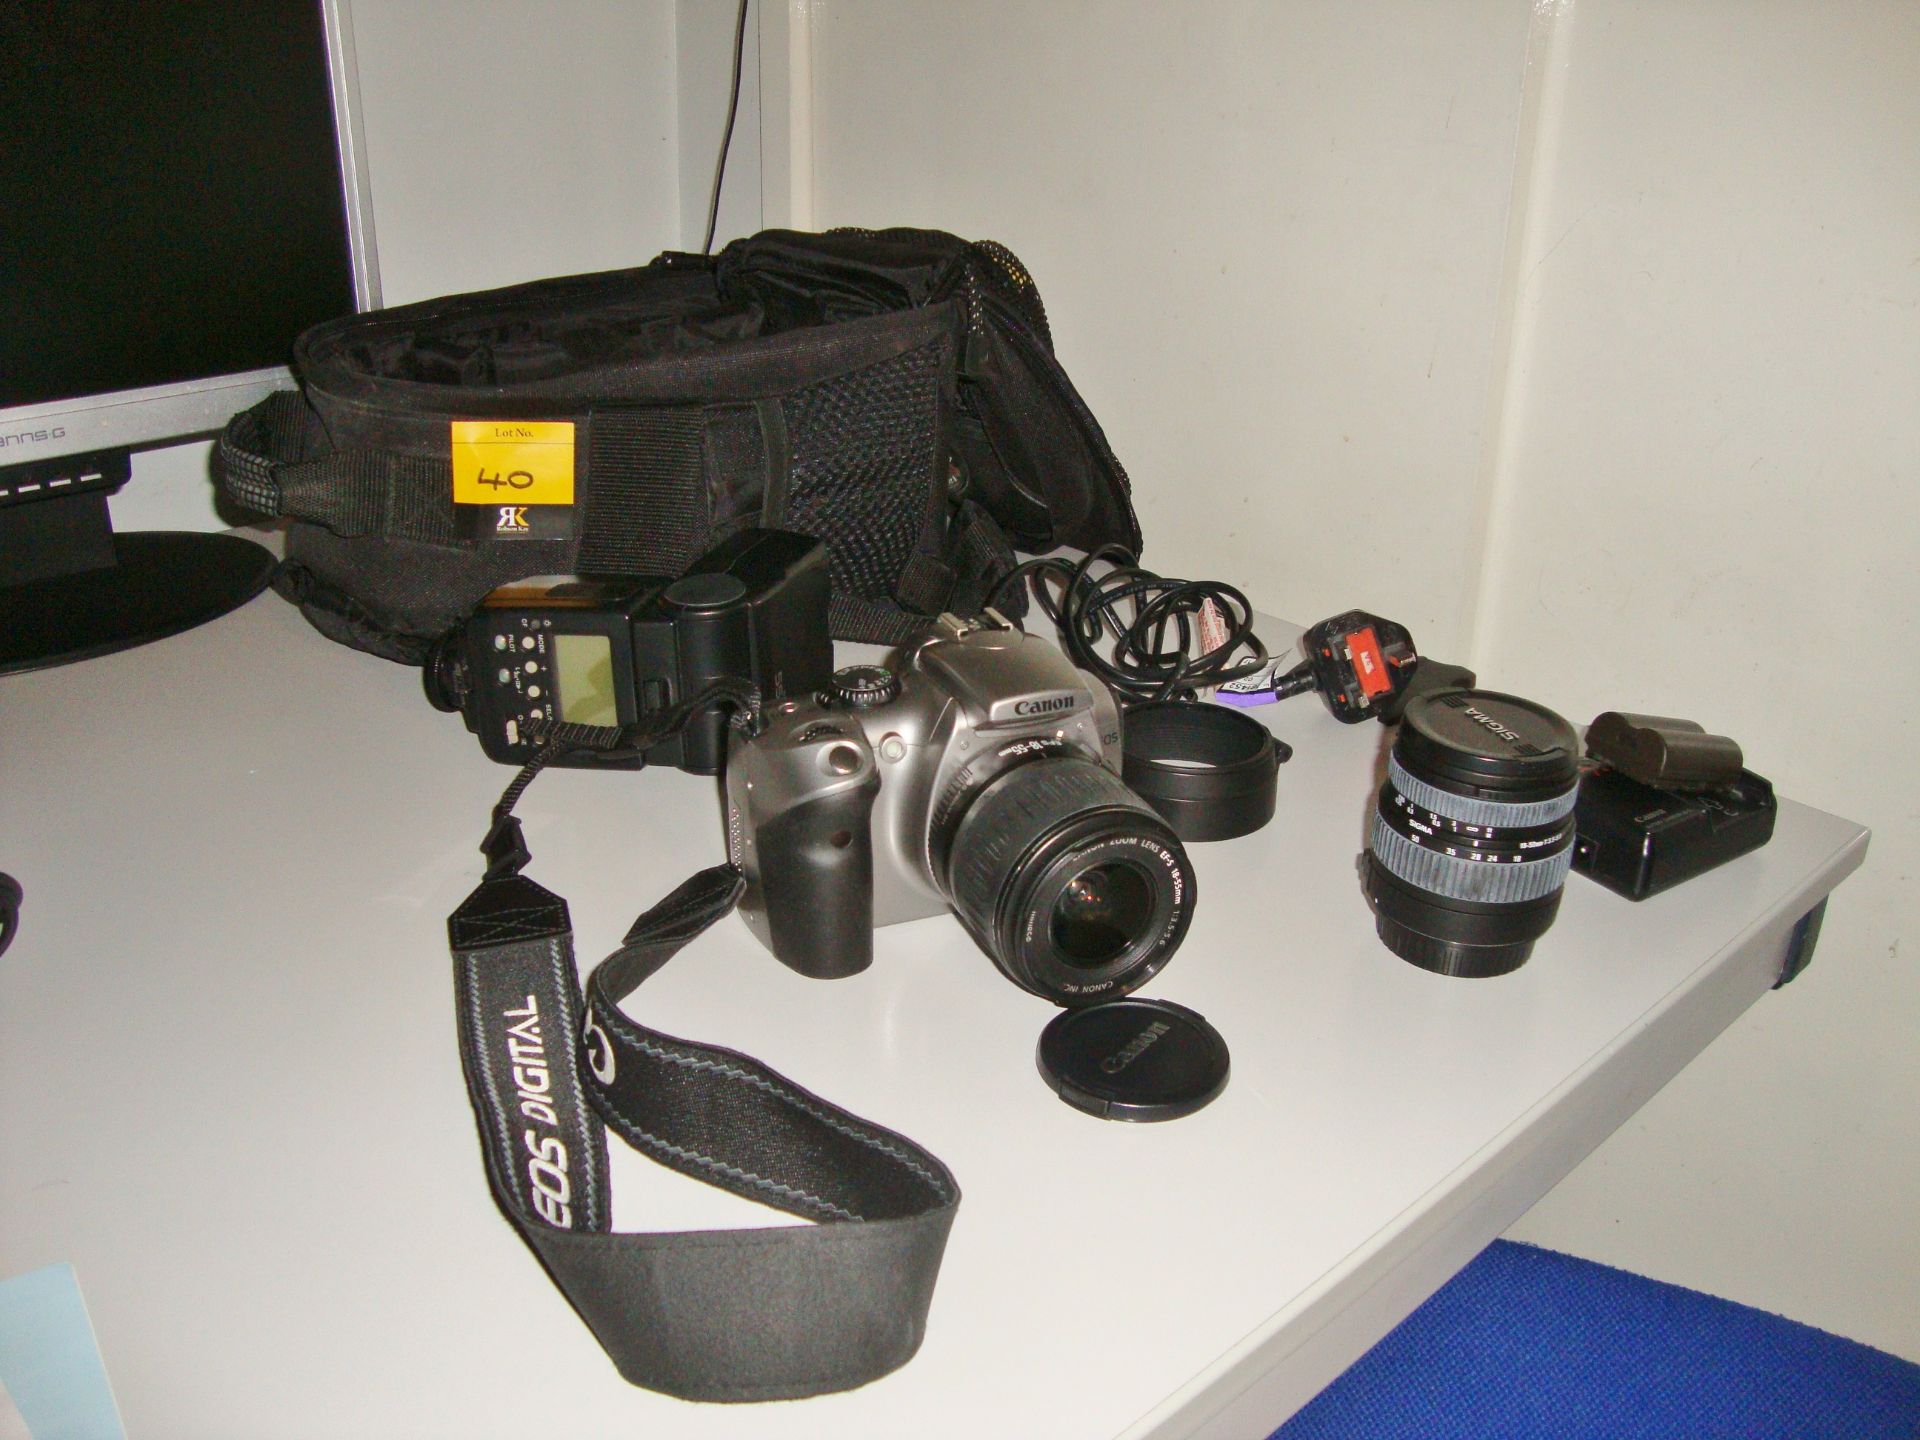 Canon 300D EOS digital SLR camera and lenses